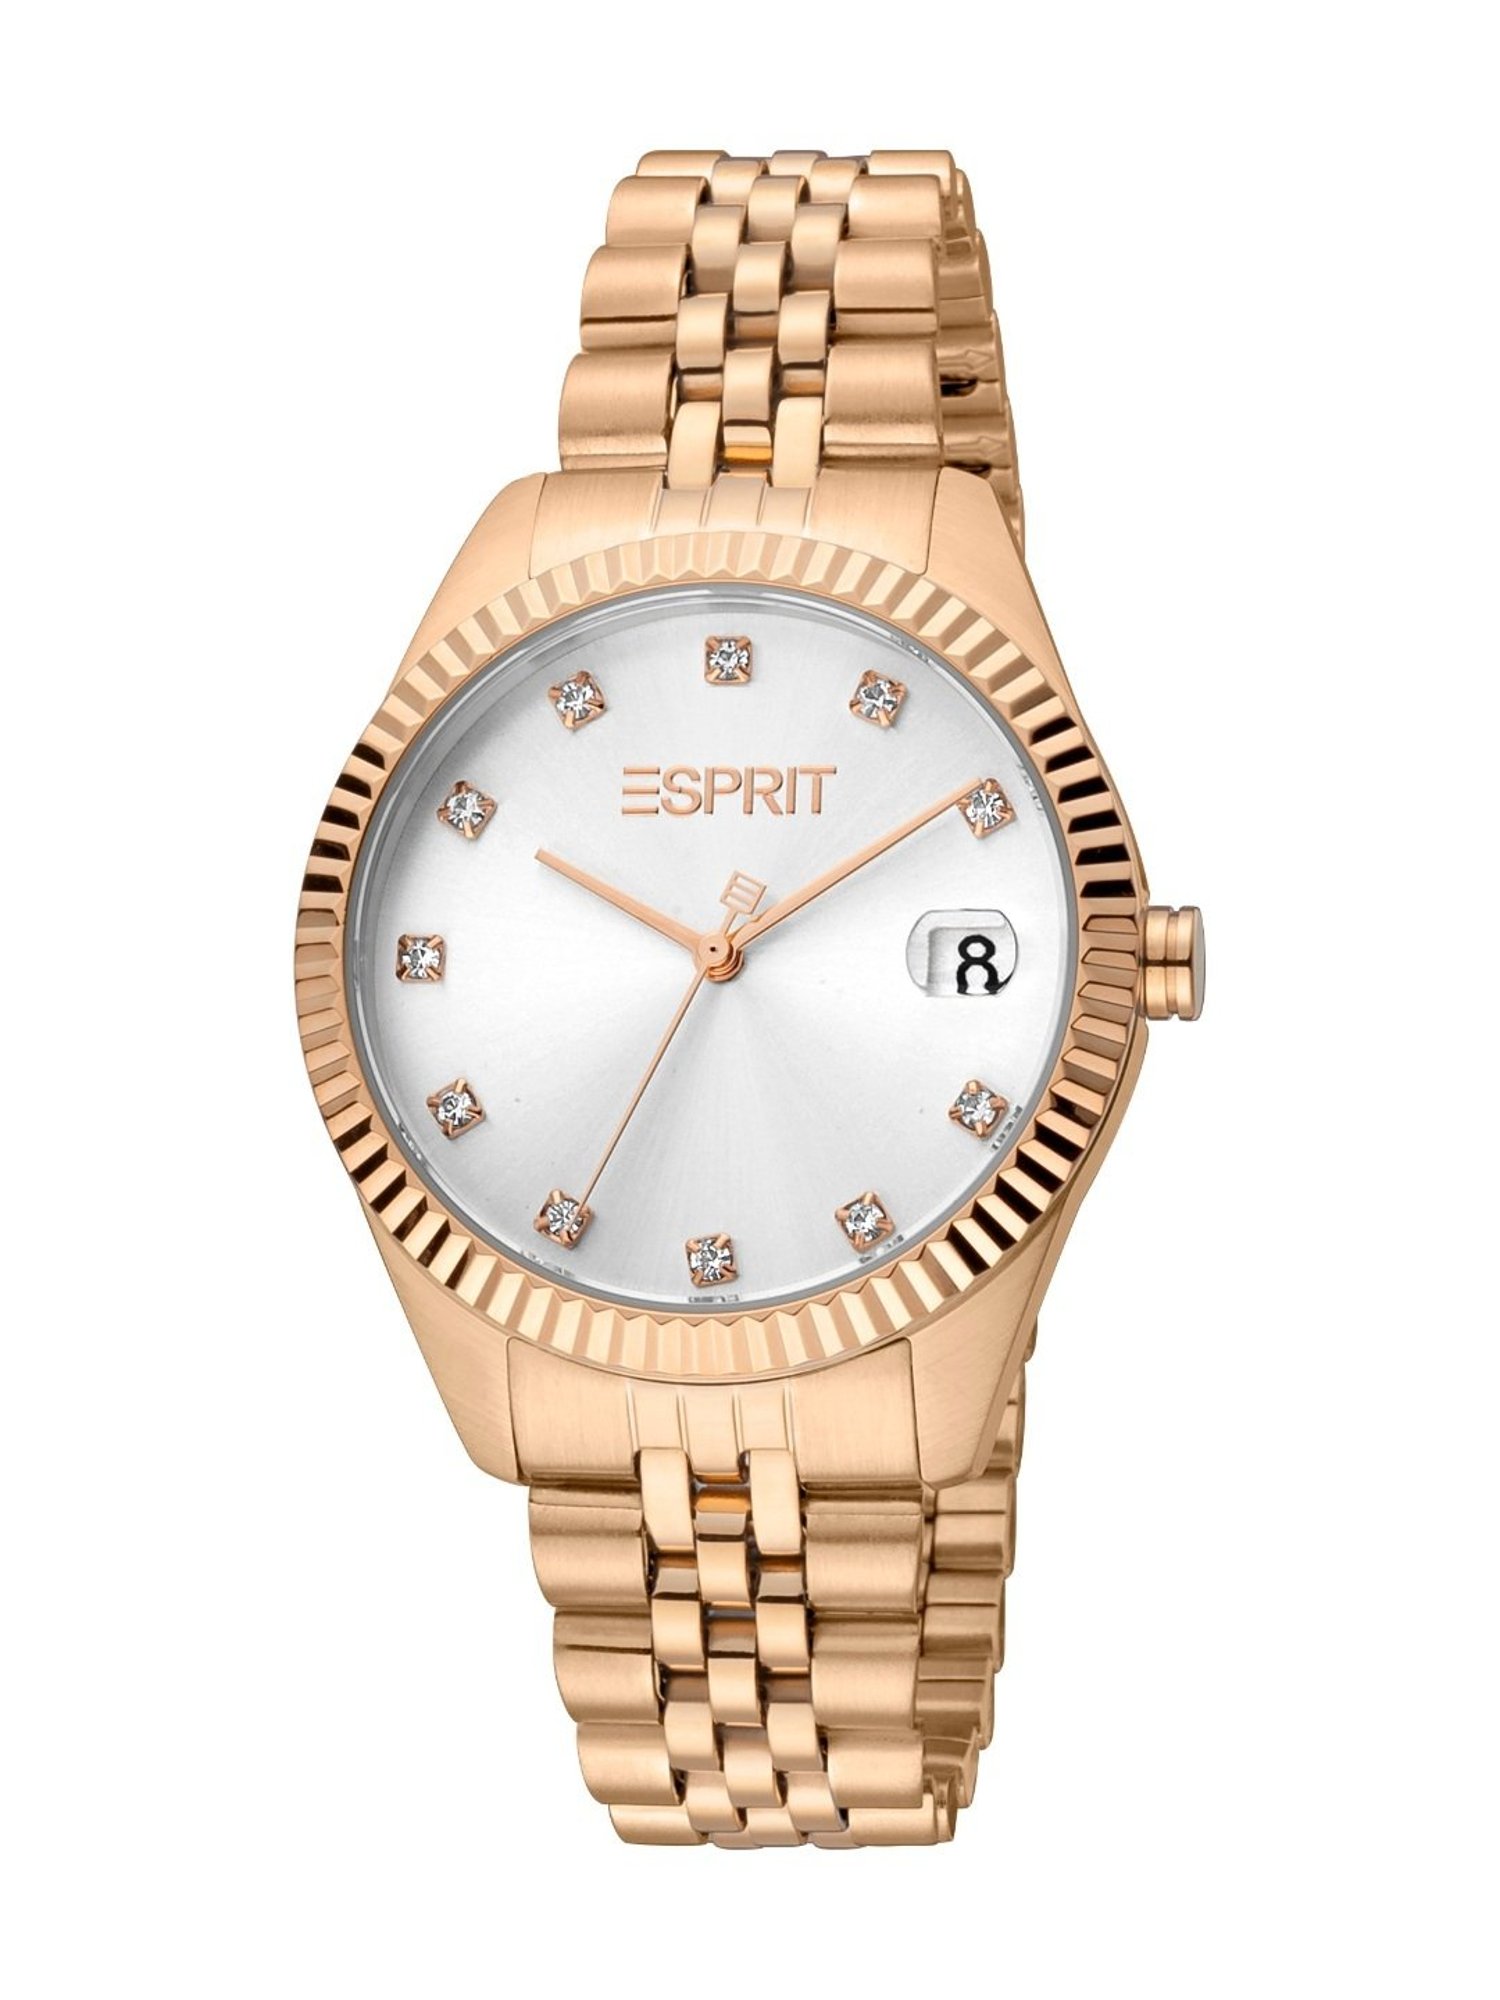 0 Esprit Watches • Official Retailer • Watchard.com